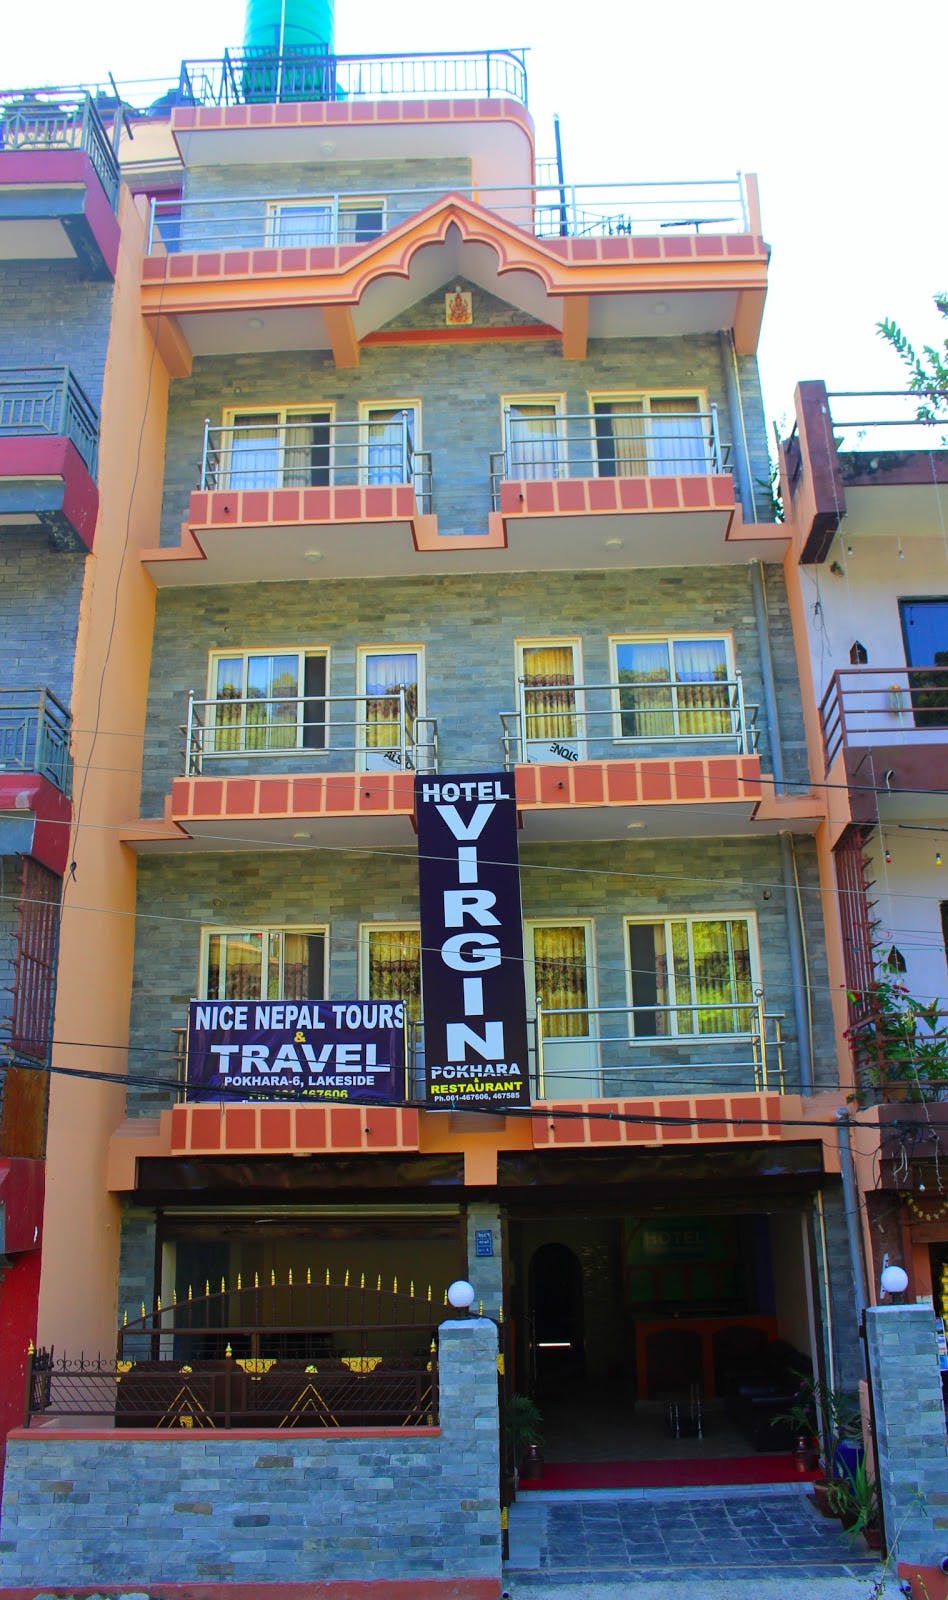 Image - Hotel Virgin Pokhara